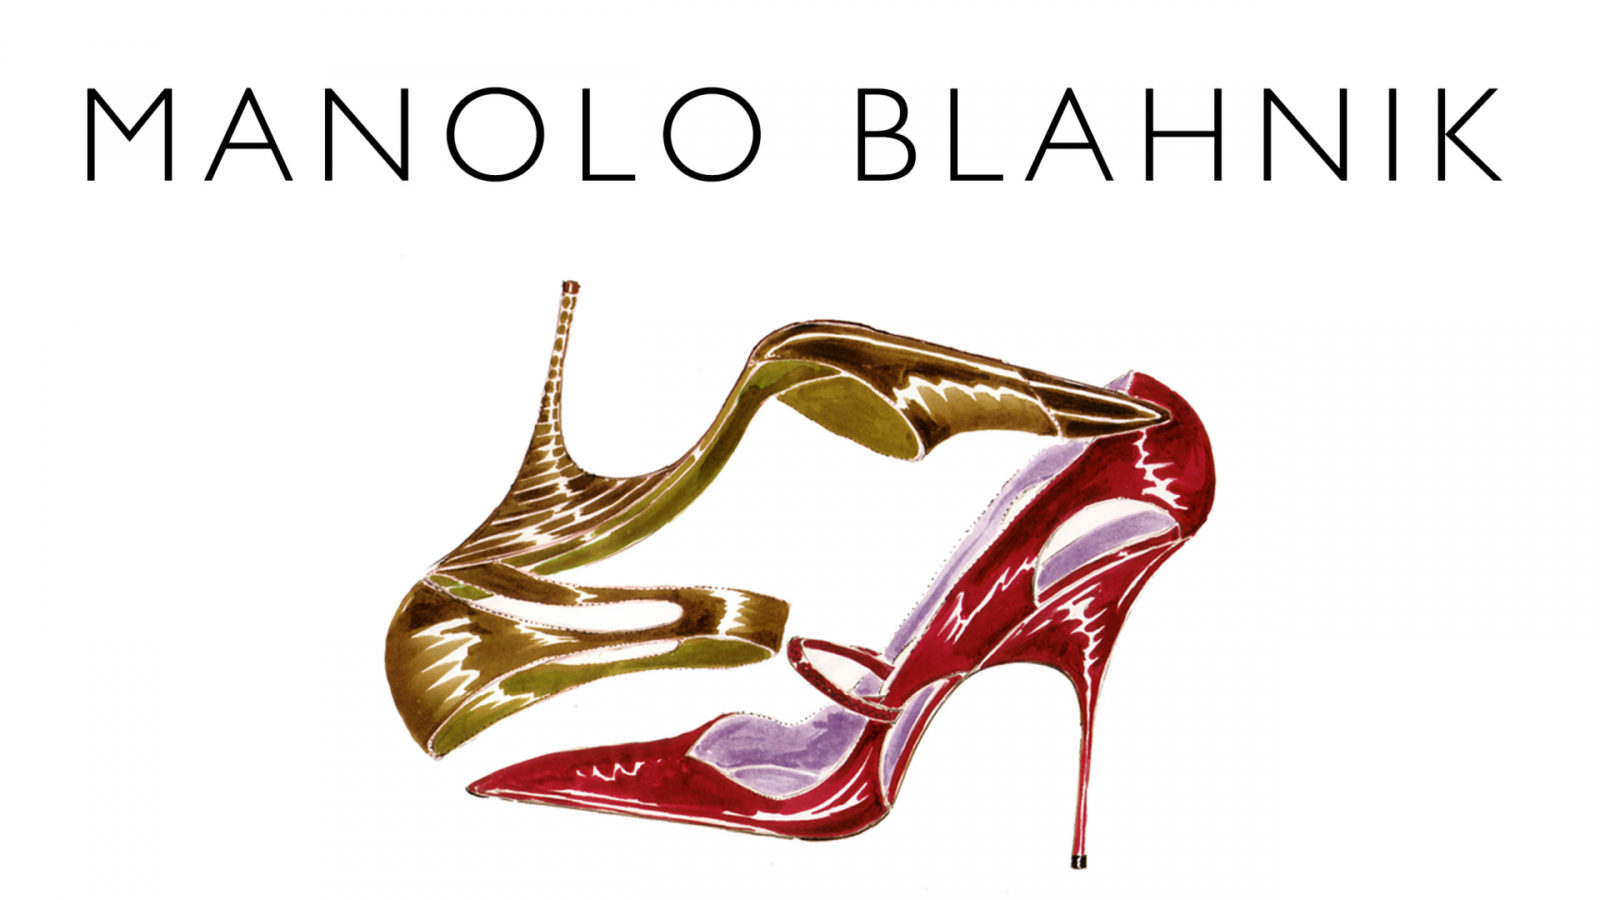 Manolo blahnik, Shoes, Design HD Wallpapers | HD Wallpapers